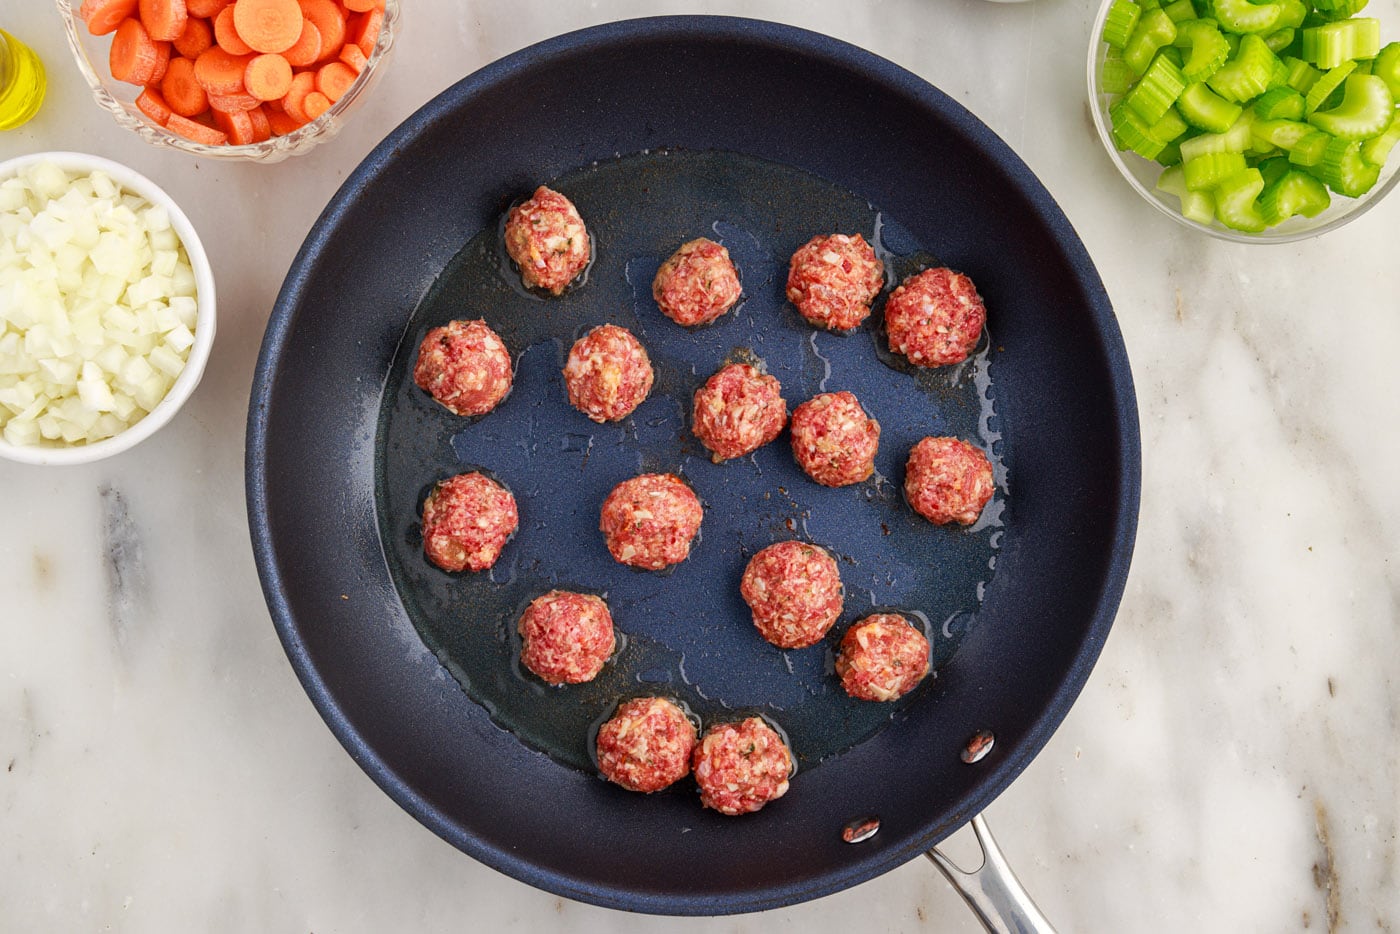 Italian meatballs searing in a skillet